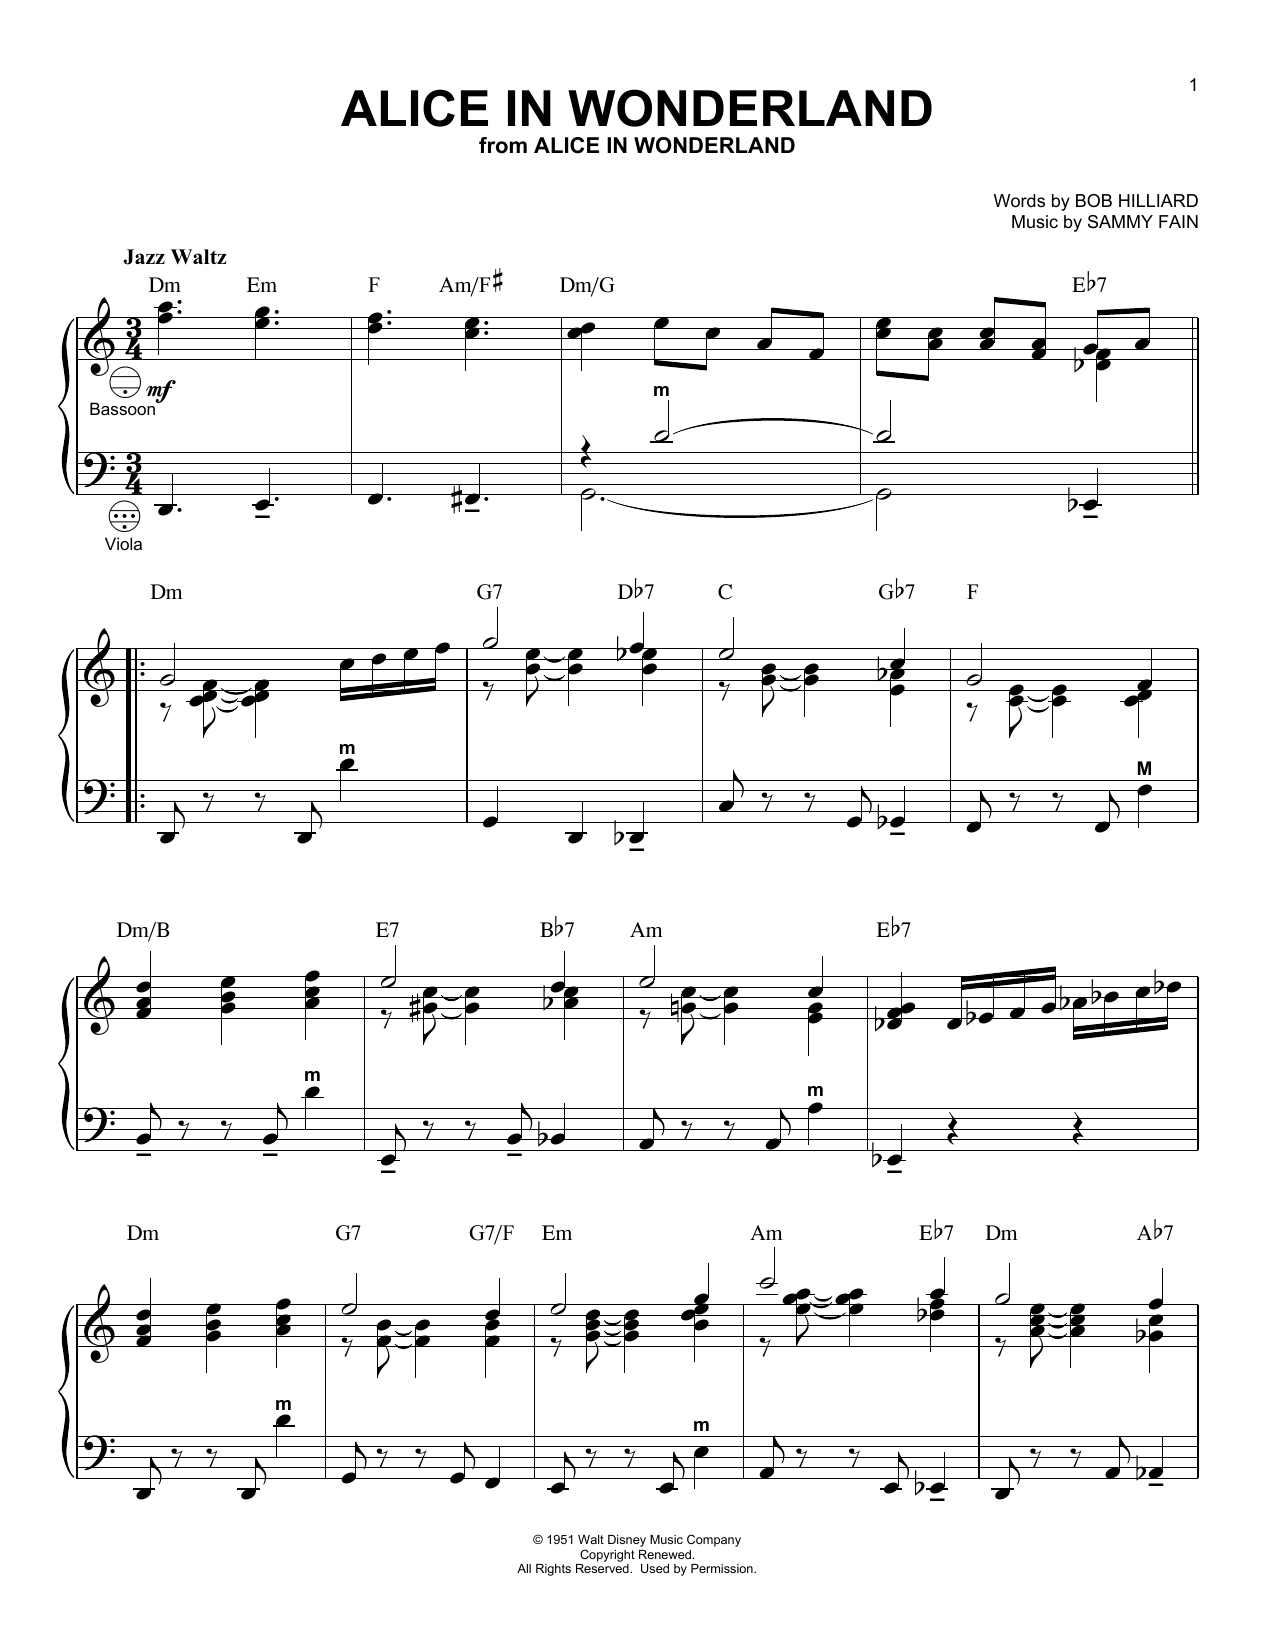 Bill Evans Alice In Wonderland (arr. Gary Meisner) Sheet Music Notes & Chords for Accordion - Download or Print PDF